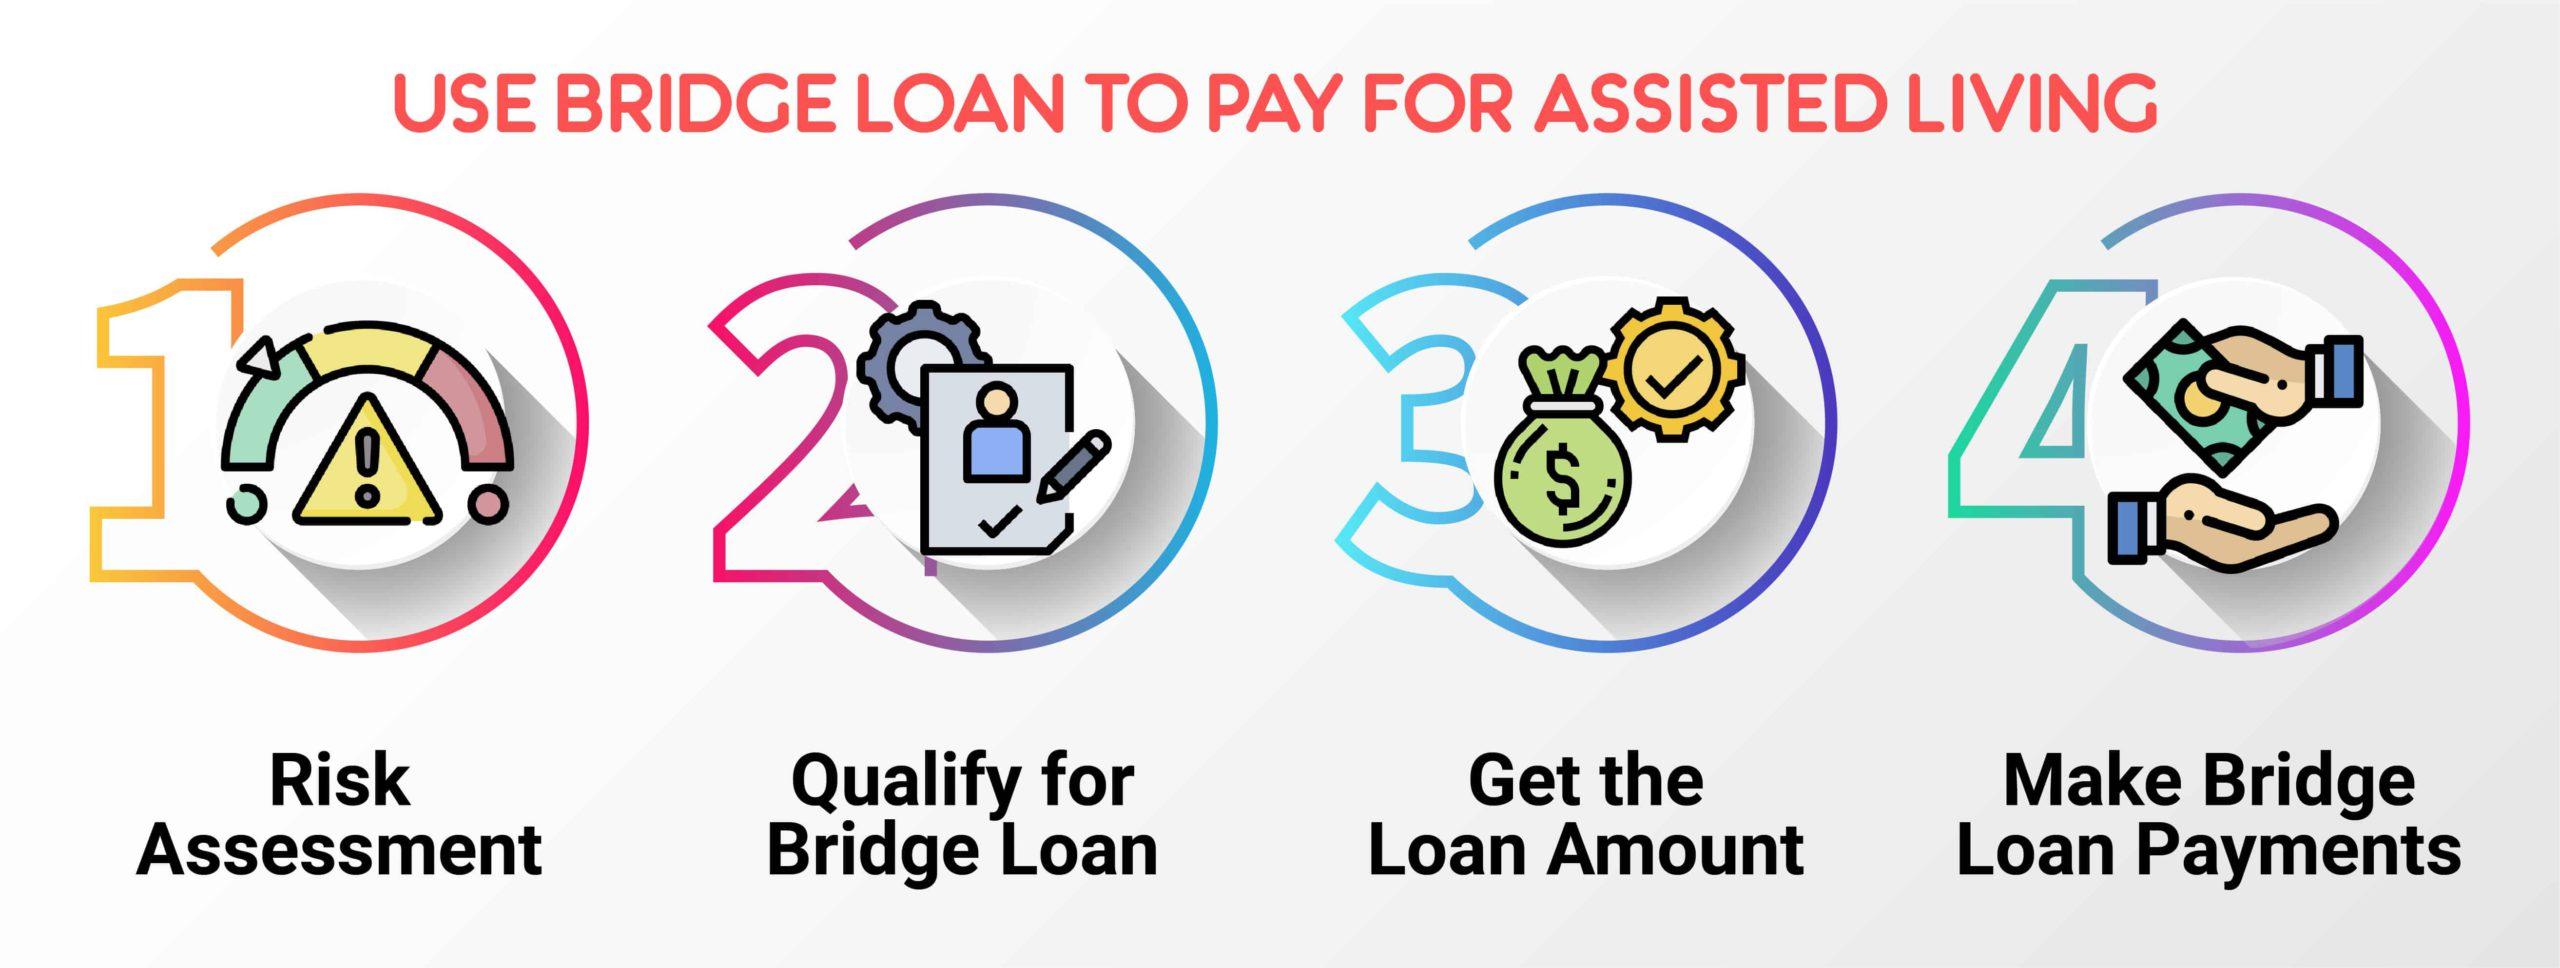 bridge loan in senior living